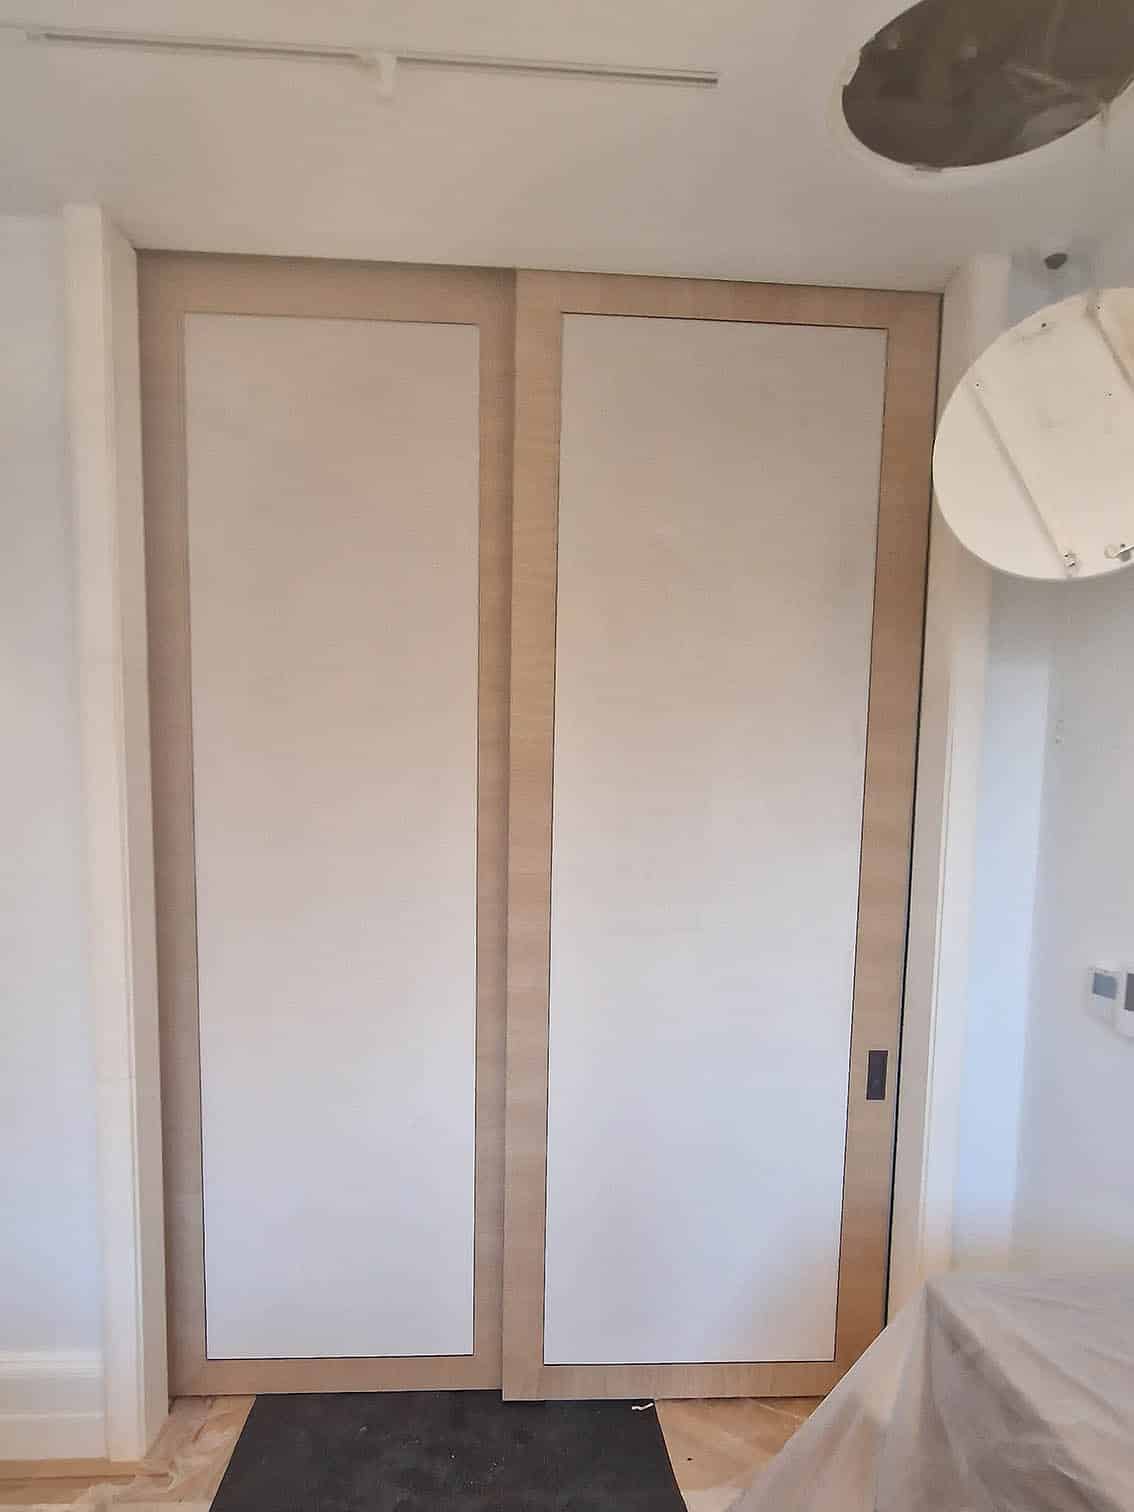 Phillip Jeffries Velvet Cocoon wallpaper professionally installed on a double sliding door in white.